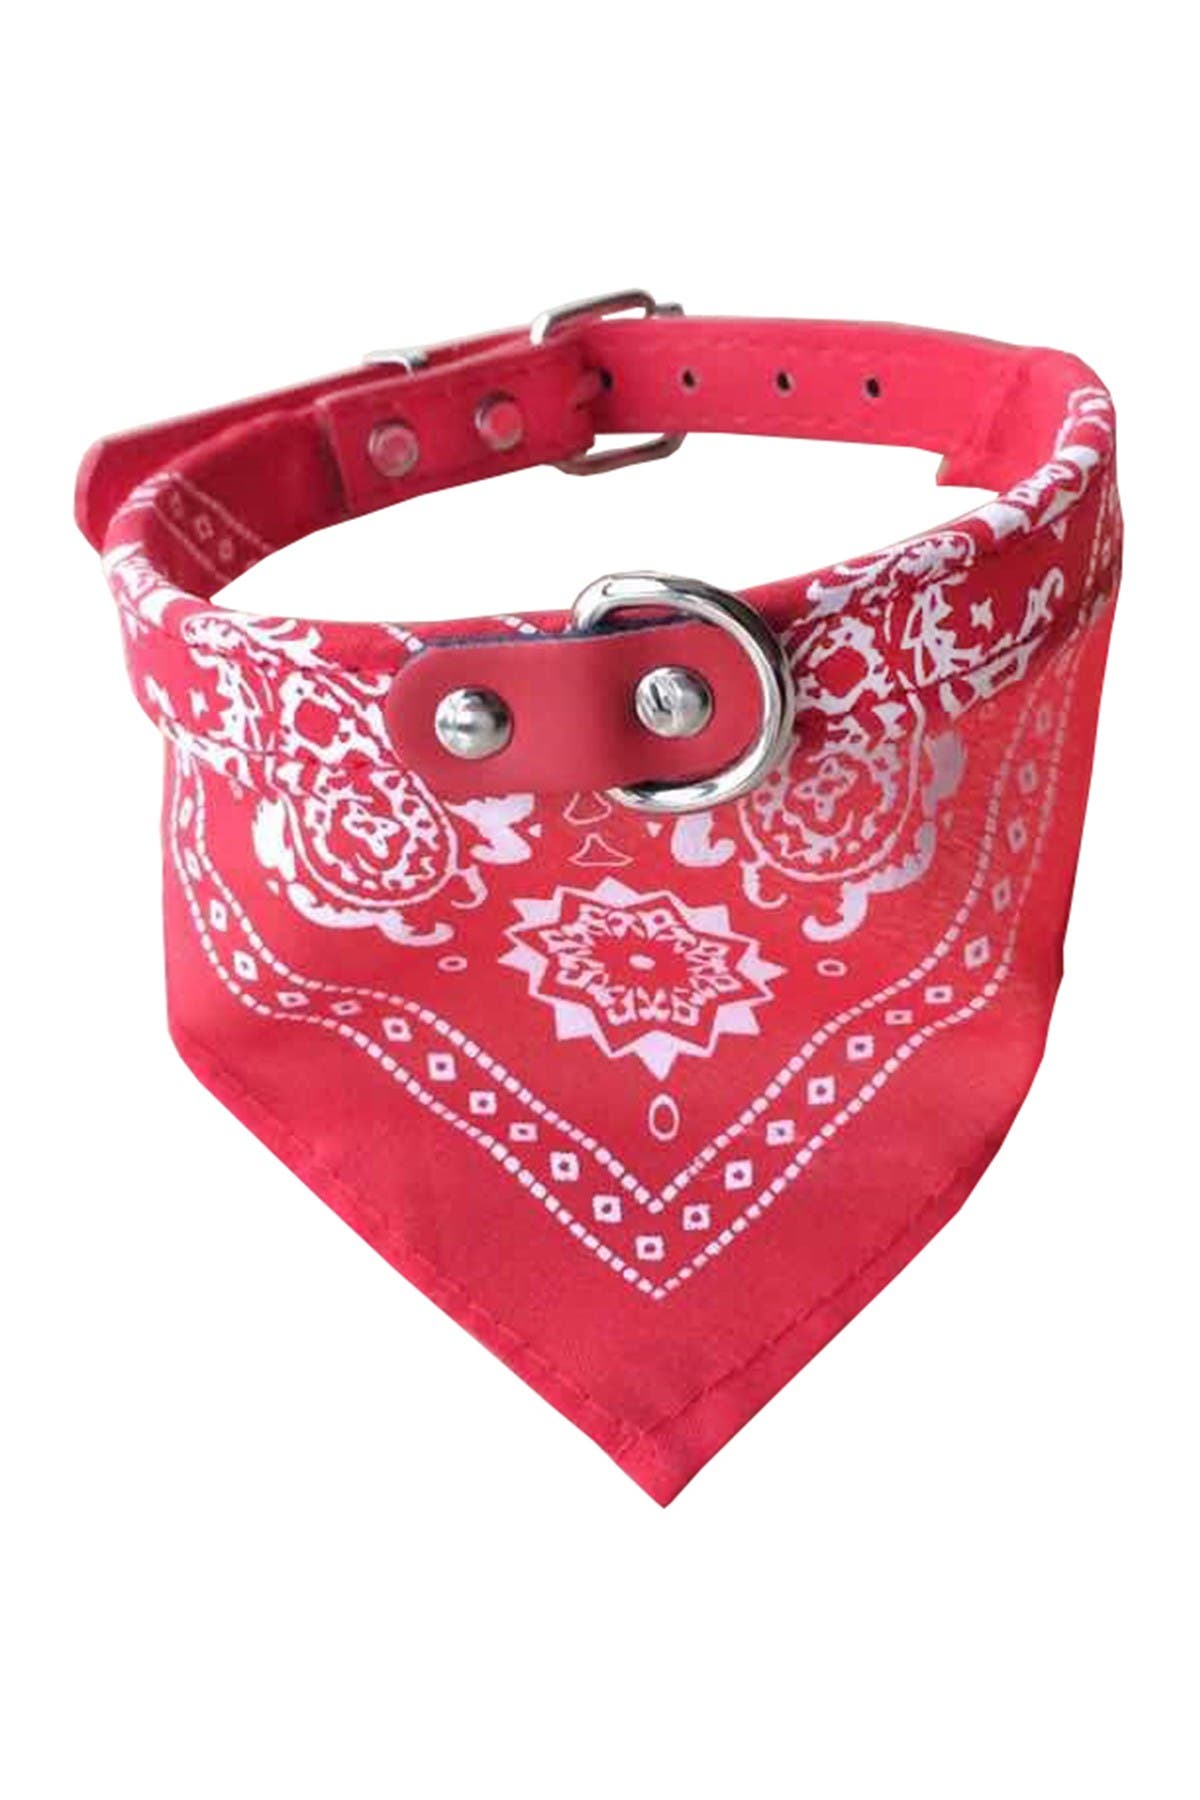 Dogs Of Glamour Medium Red Bandana Collar